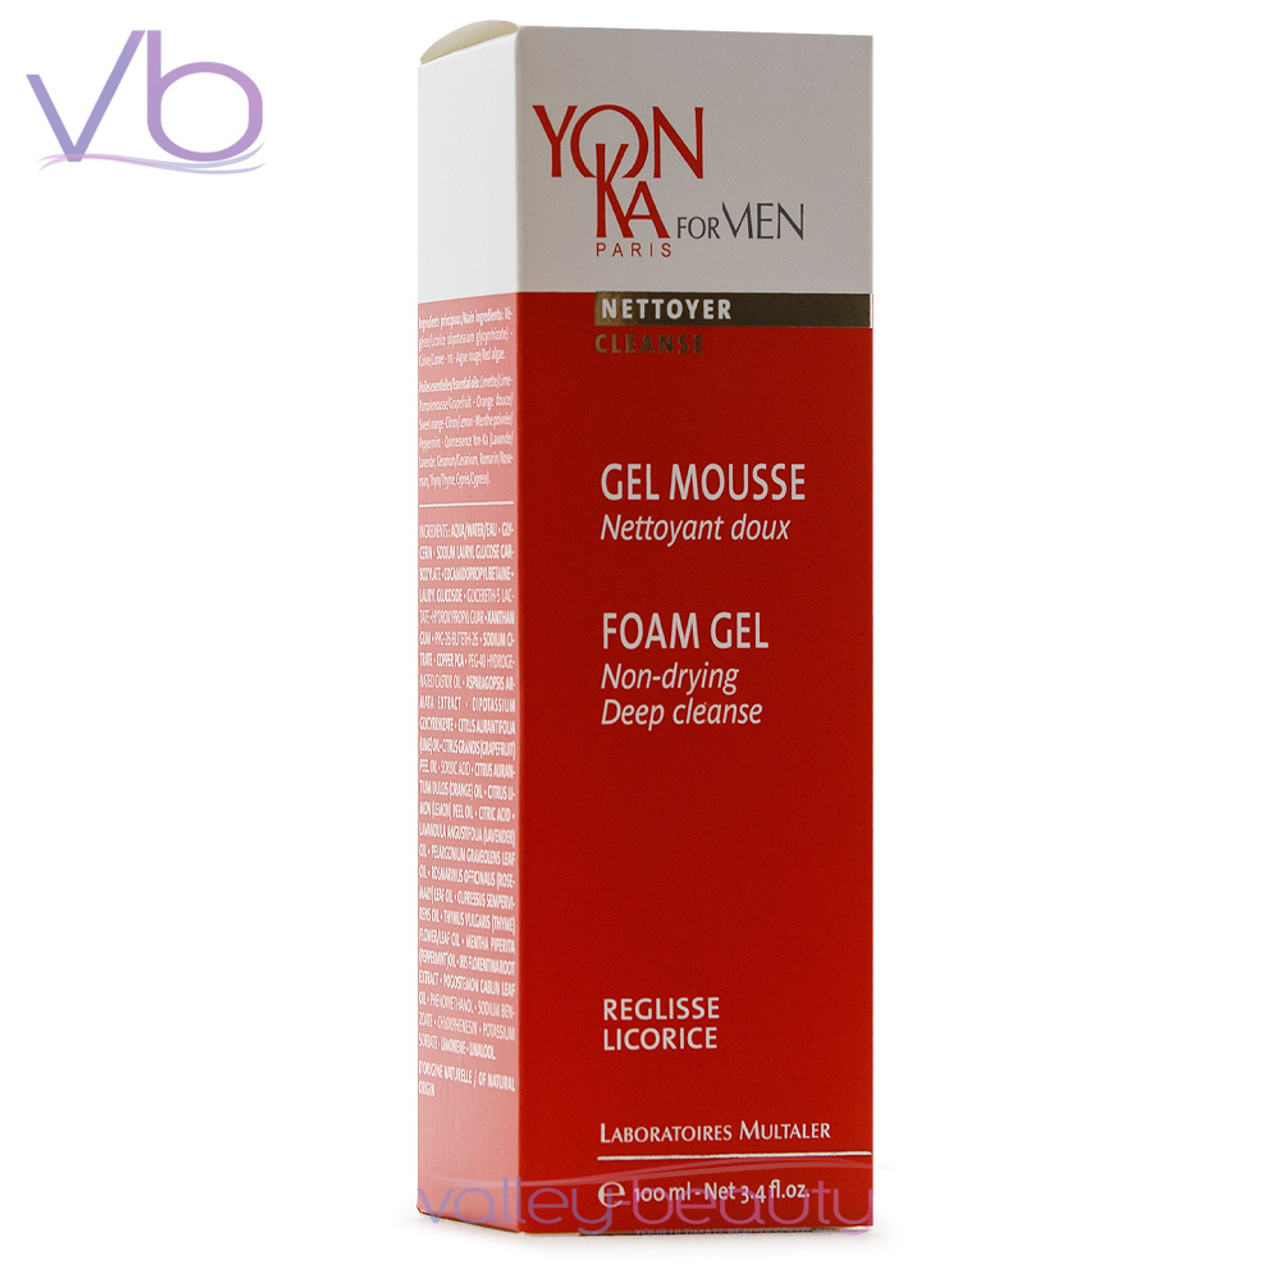 Yonka for Men Foam Gel | Natural Non-Drying Cooling Deep Face Cleanser, 3.4 fl.oz. EXP 06/2024